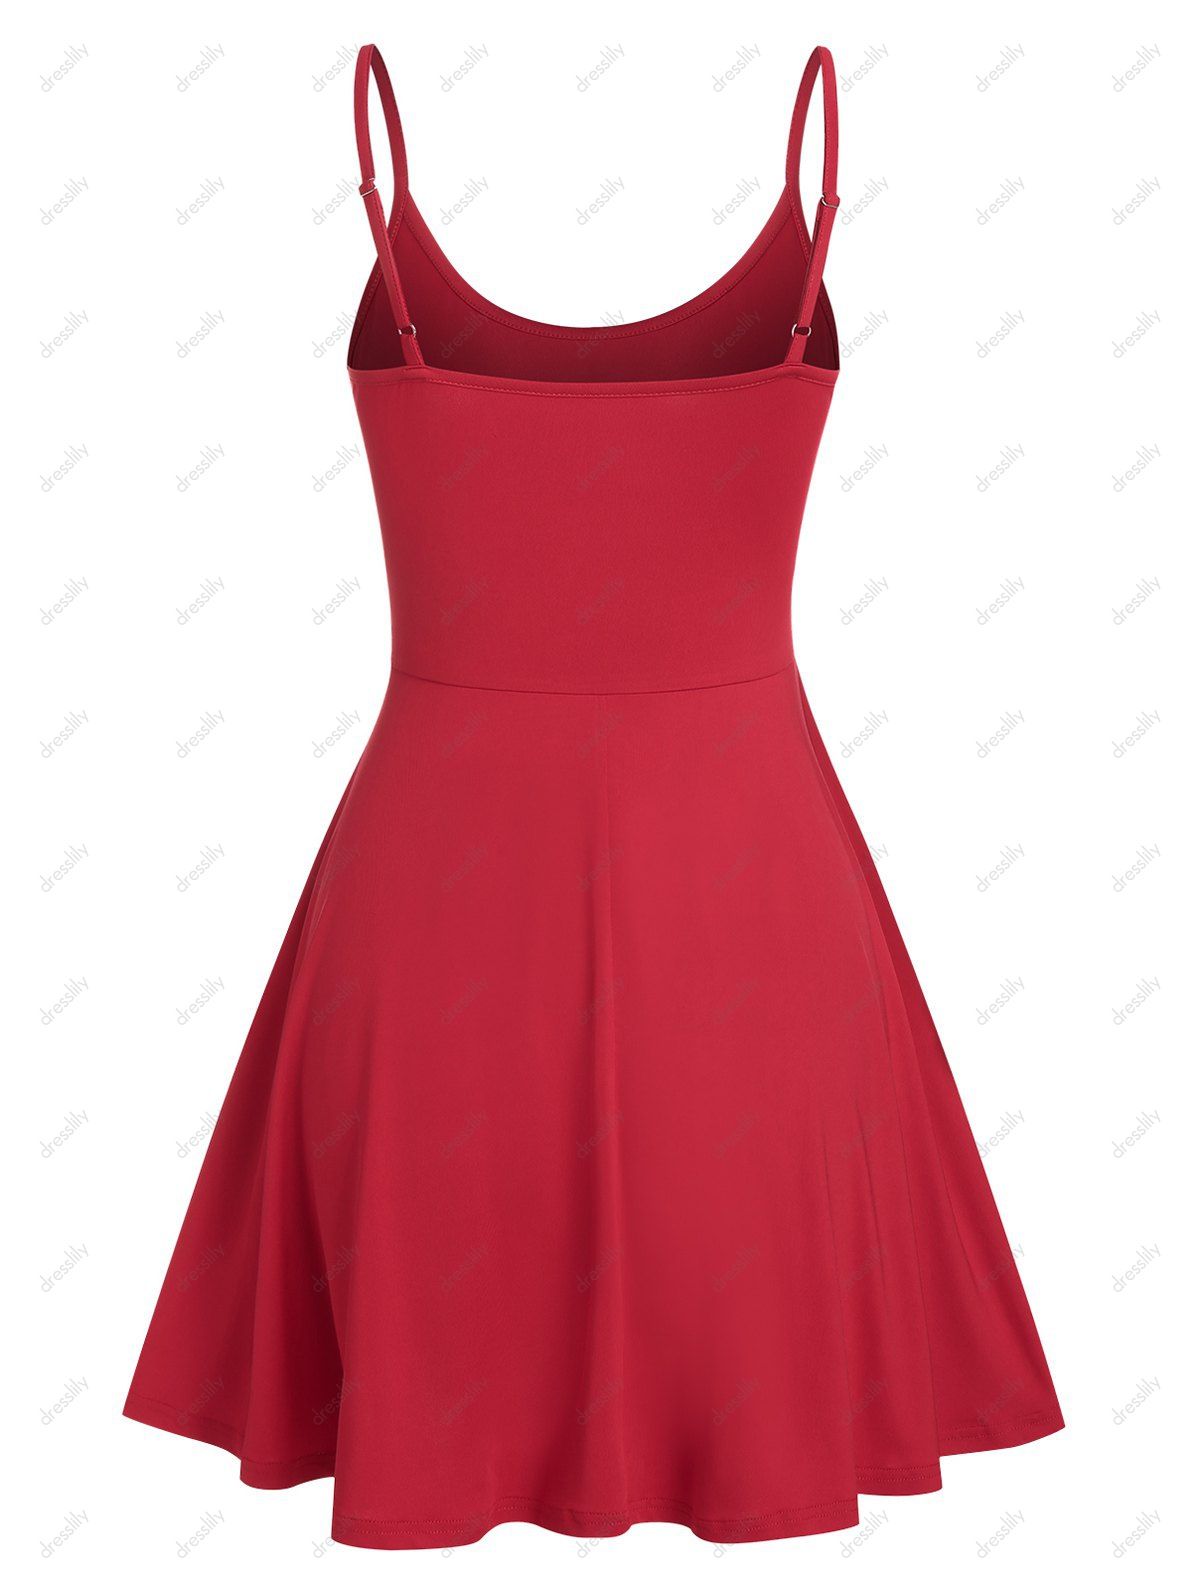 [43% OFF] 2021 Spaghetti Strap Plain Flare Dress In RED | DressLily